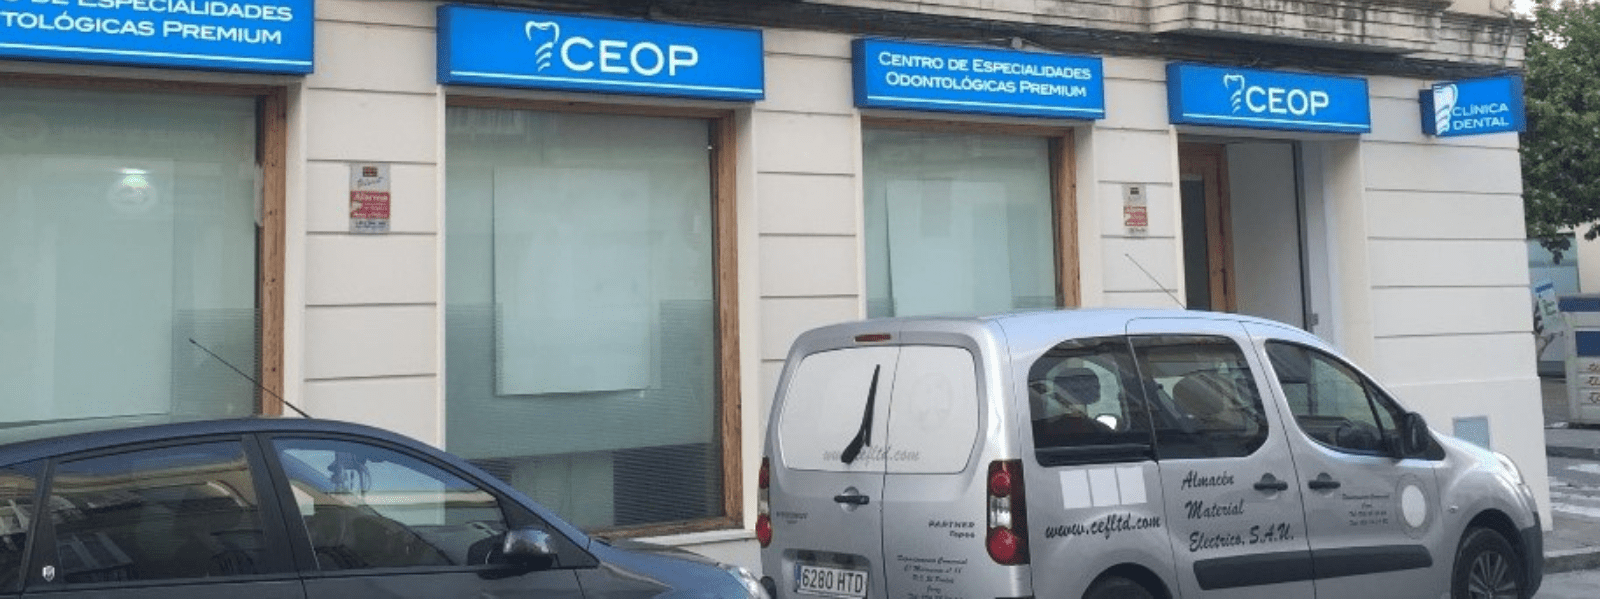 CEOP - Centro de Especialidades Odontológicas Premium banner 6